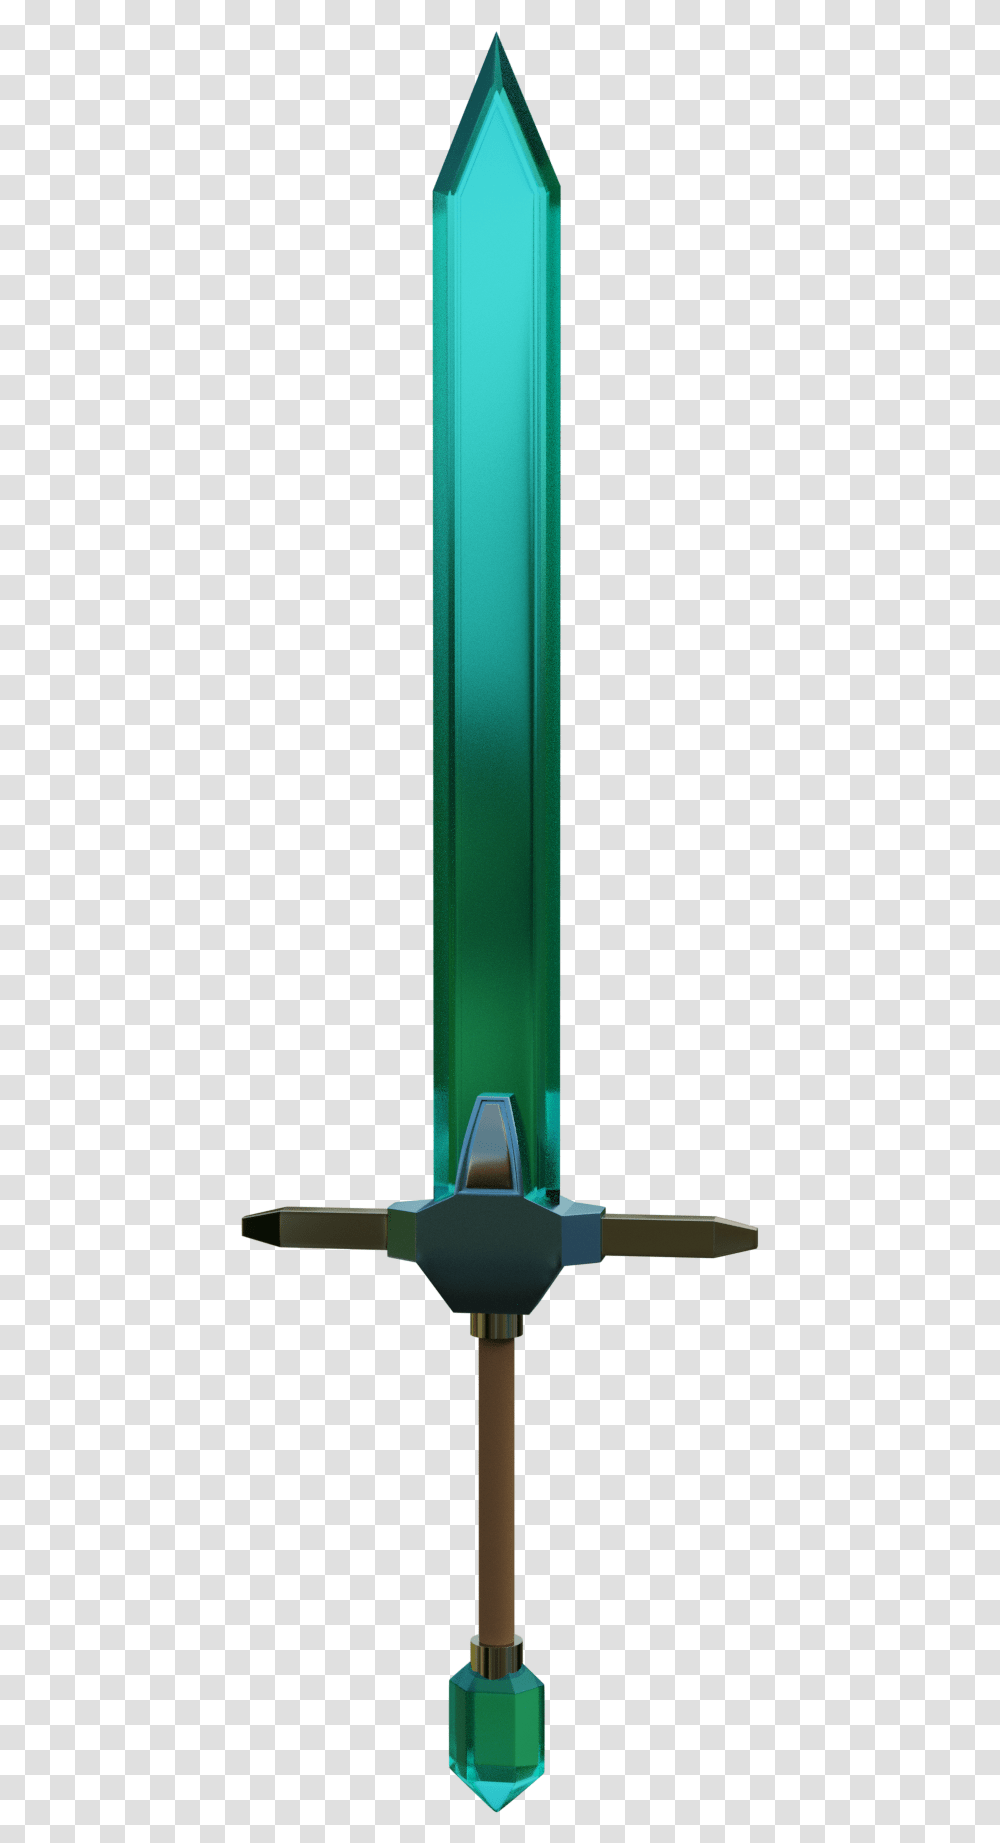 Realistic Minecraft Diamond Sword, PEZ Dispenser, Cylinder, Lighter, Lamp Transparent Png